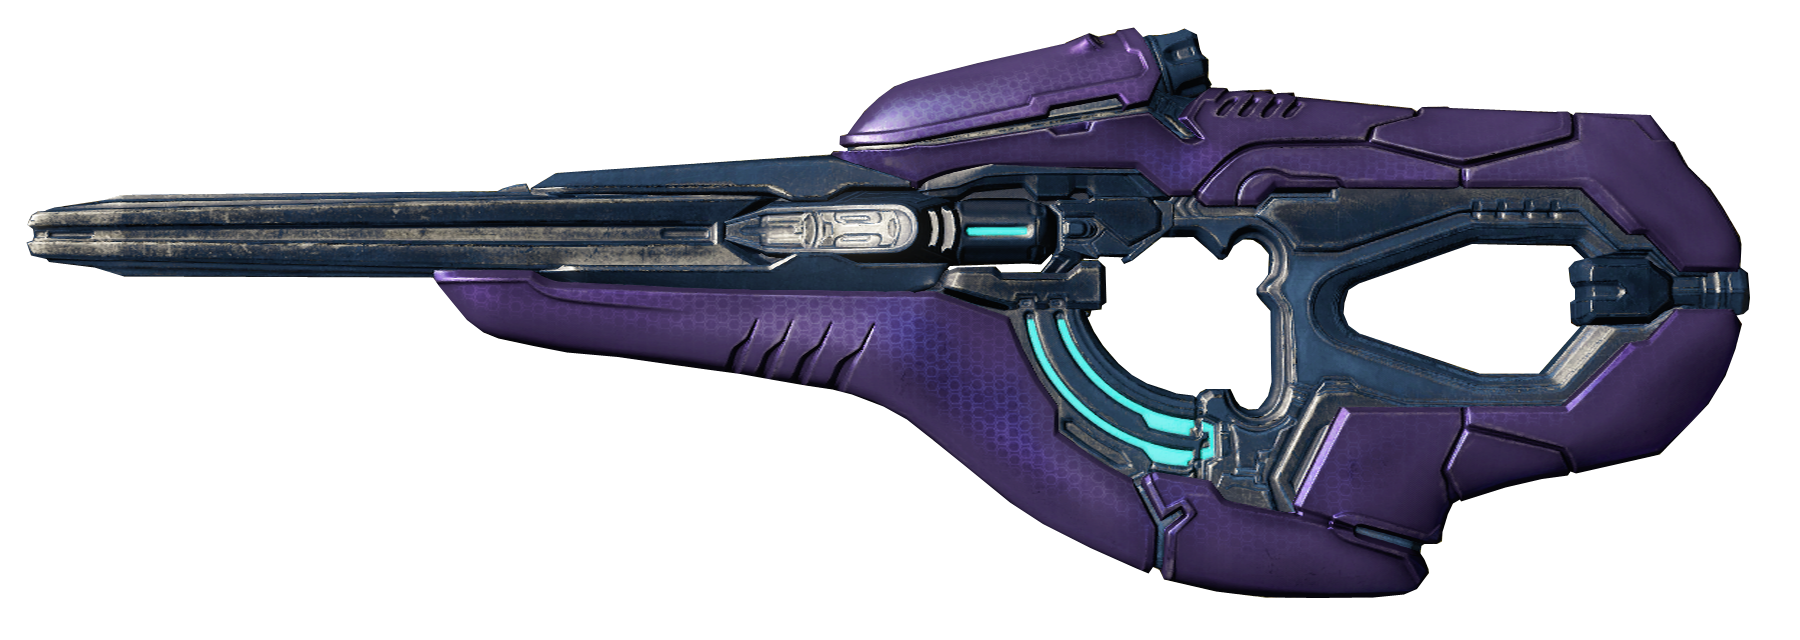 halo covenant plasma weapons